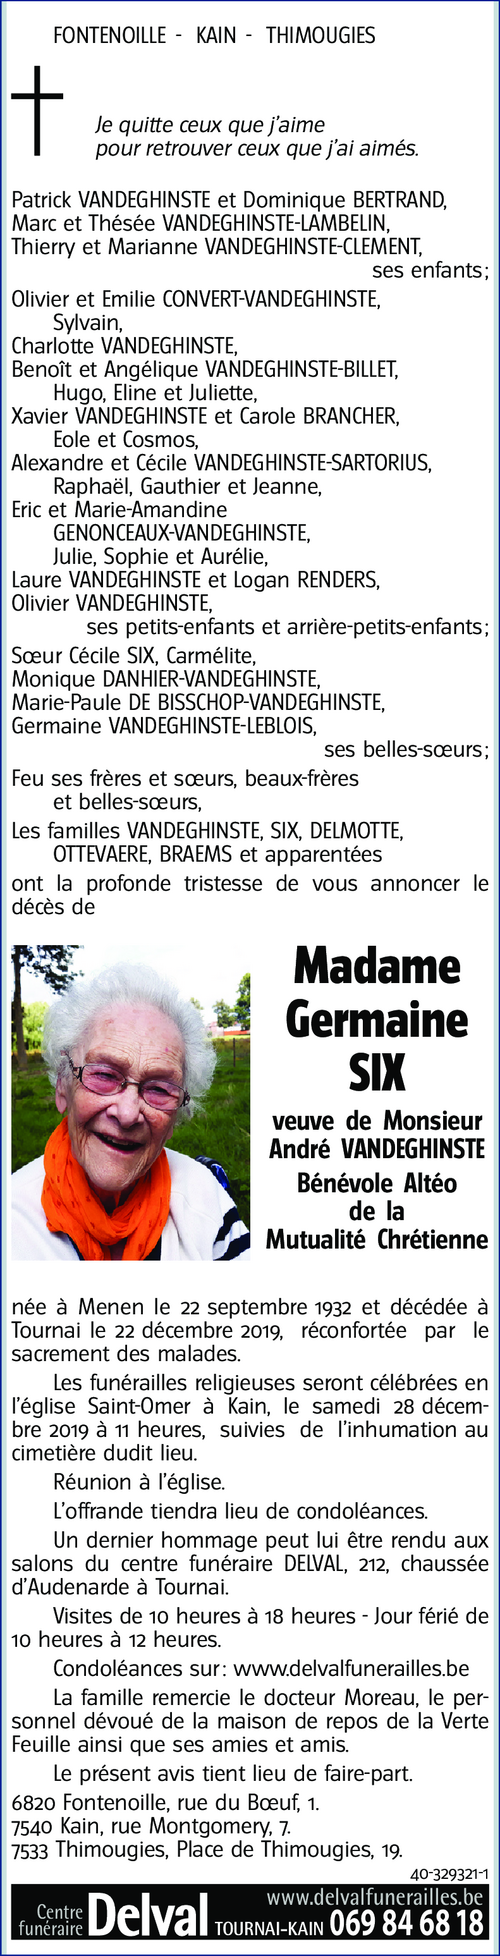 Germaine SIX